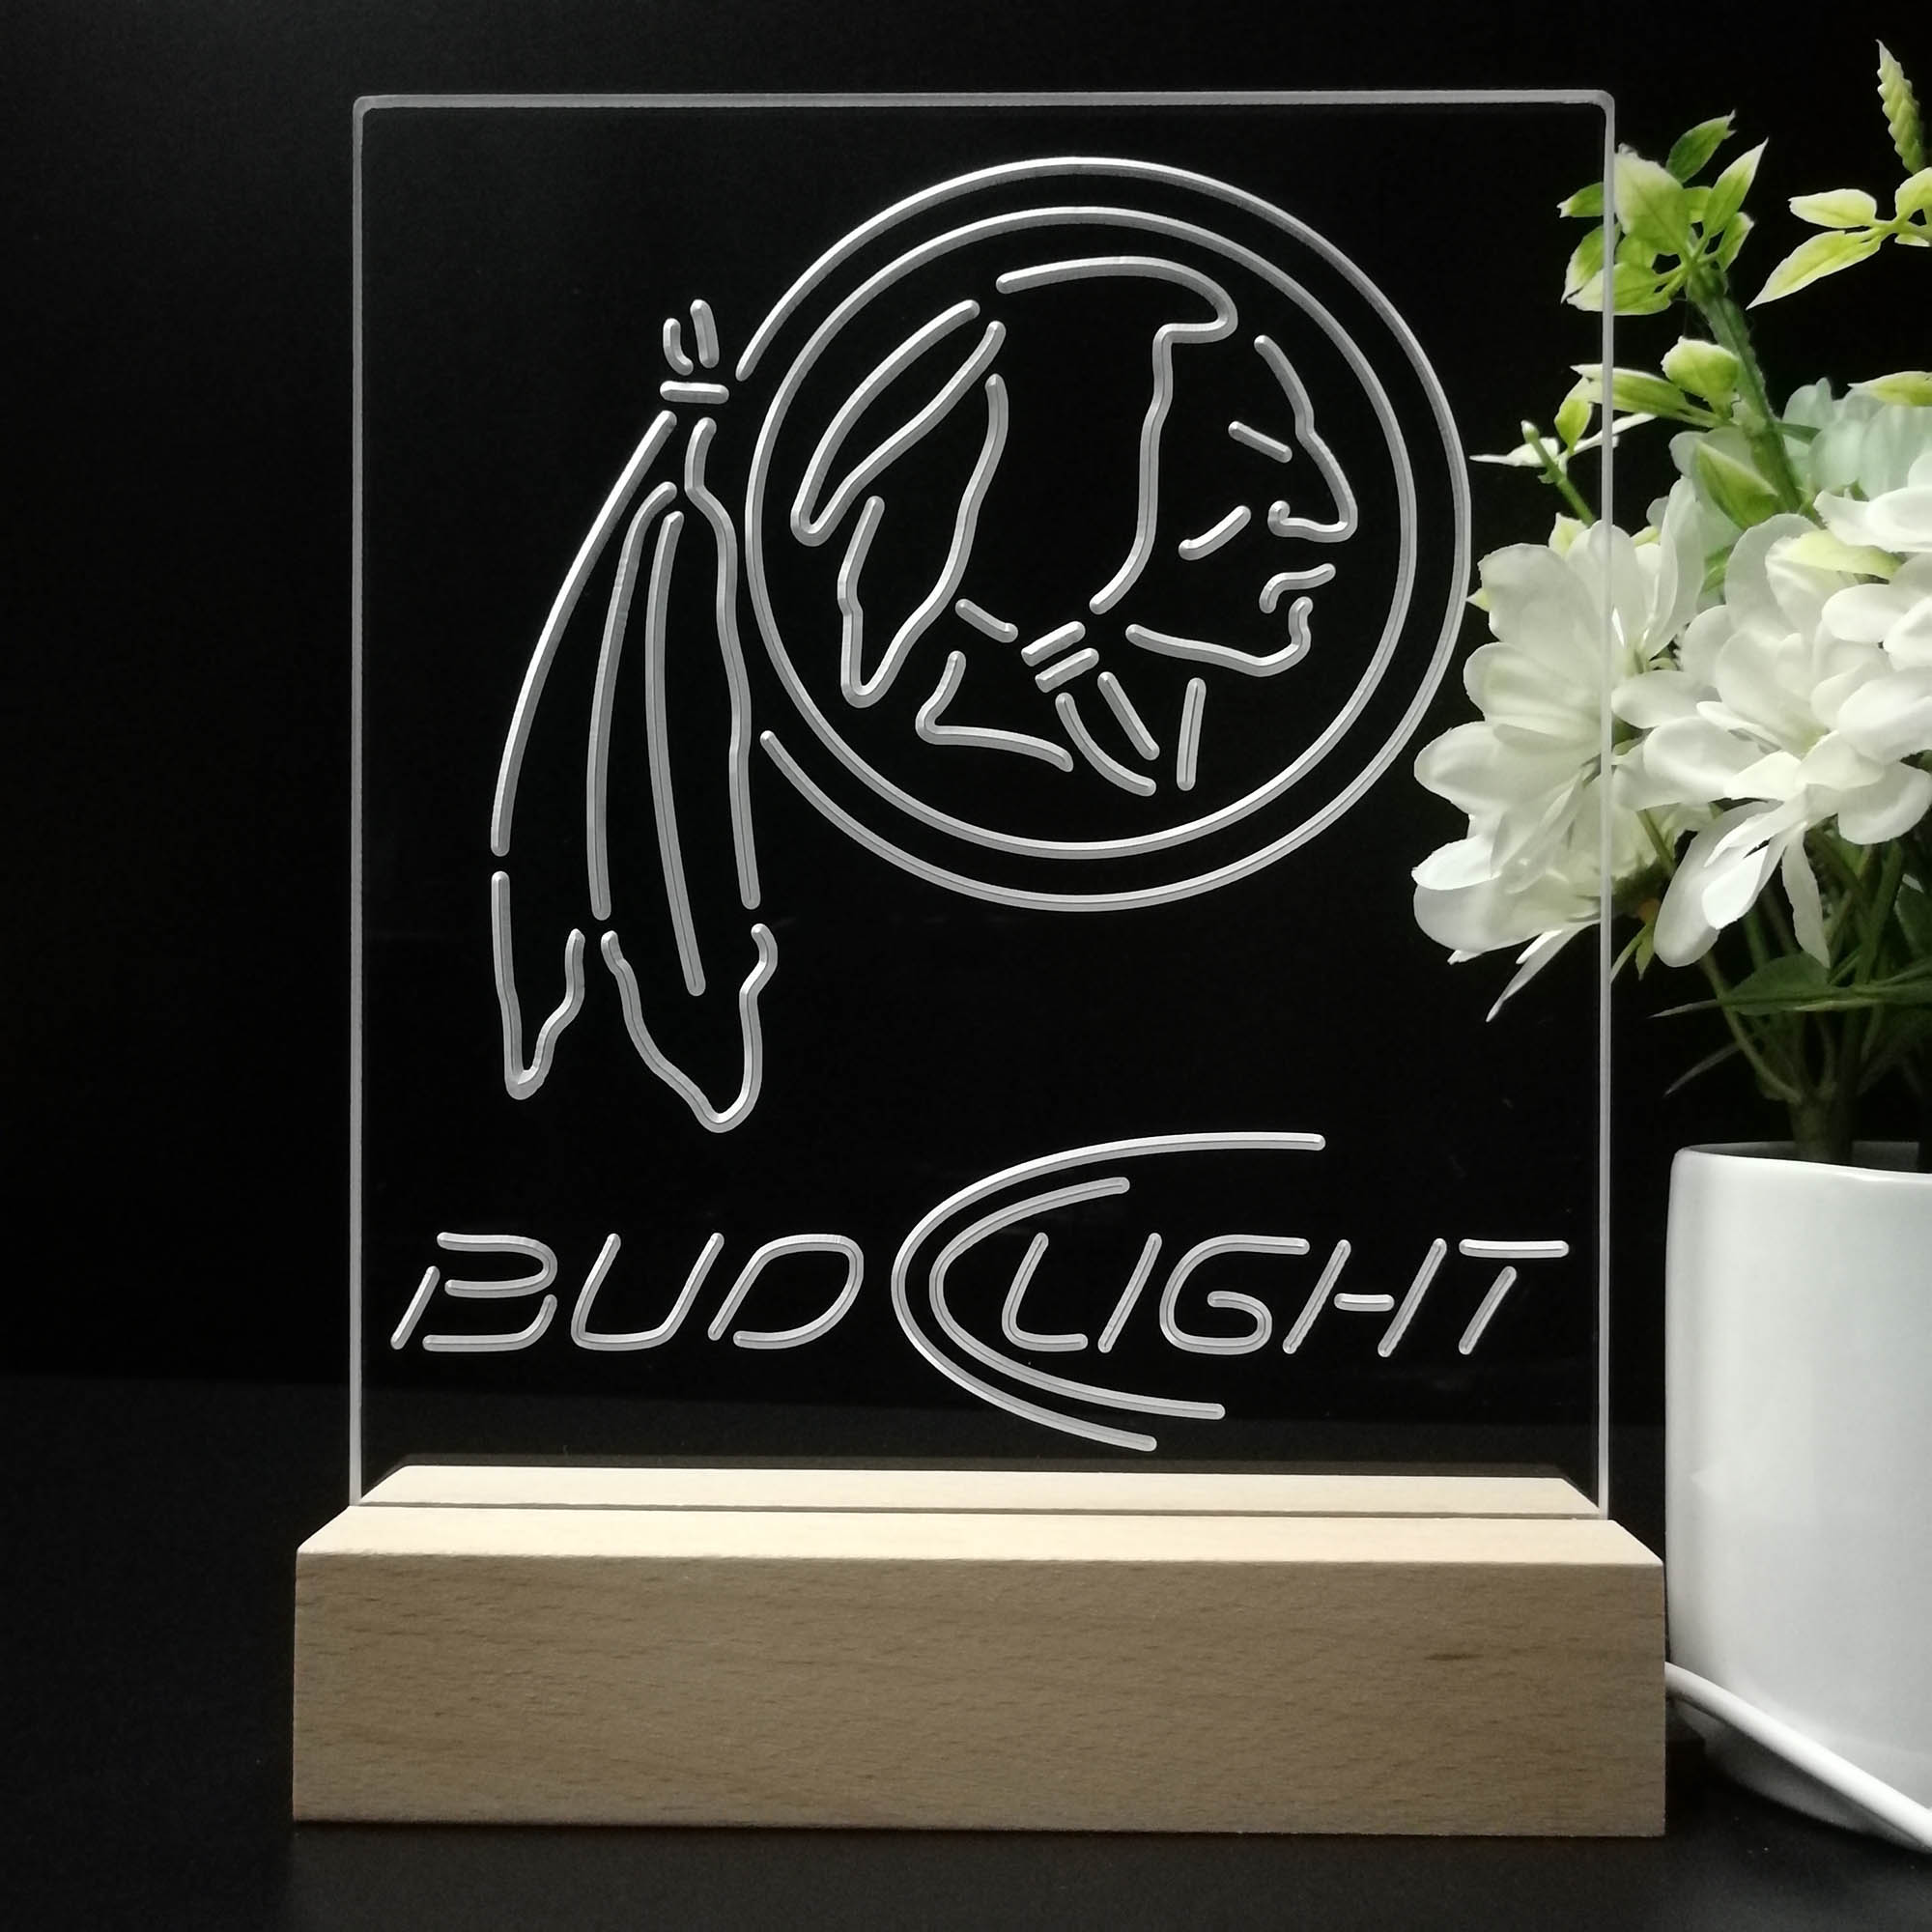 Bud Light Washington Redskins 3D LED Optical Illusion Sport Team Night Light